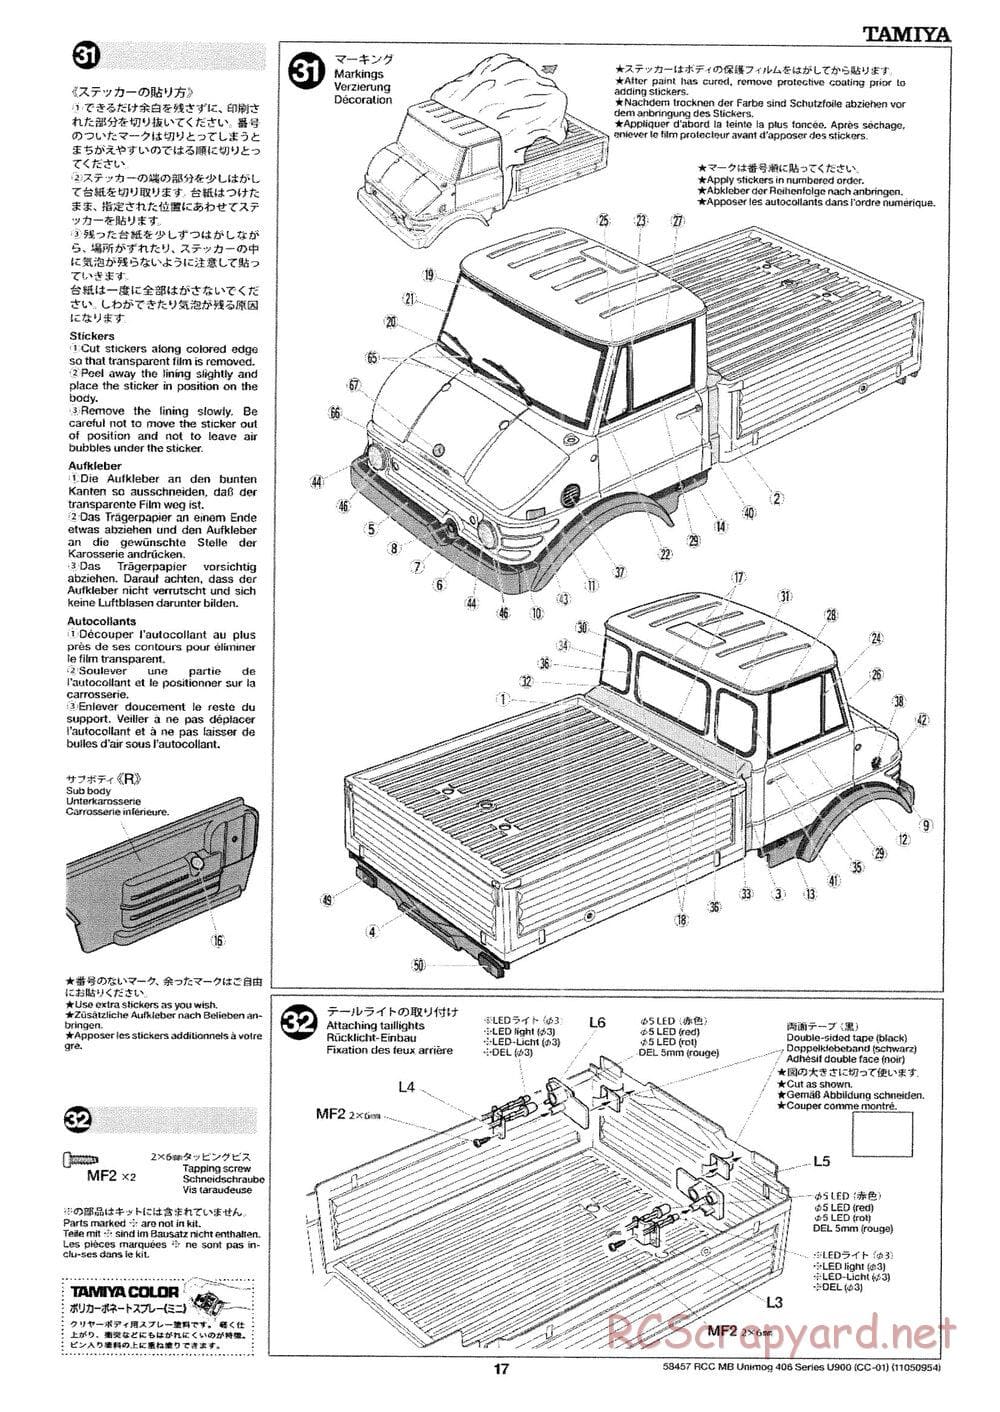 Tamiya - Mercedes-Benz Unimog 406 Series U900 - CC-01 Chassis - Manual - Page 17